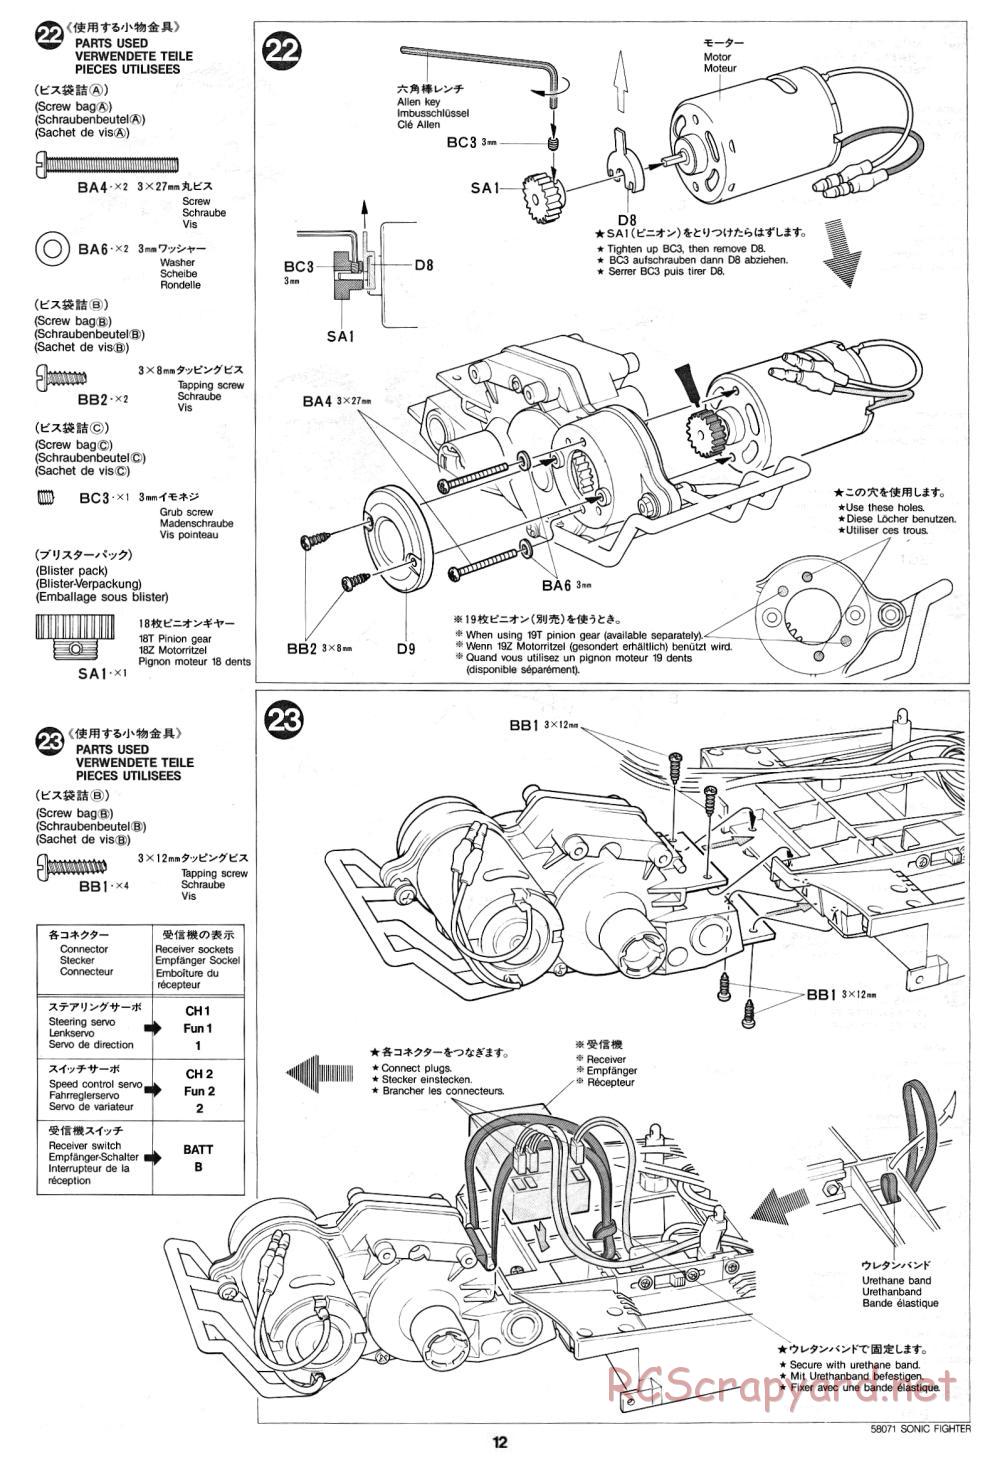 Tamiya - Sonic Fighter - 58071 - Manual - Page 12